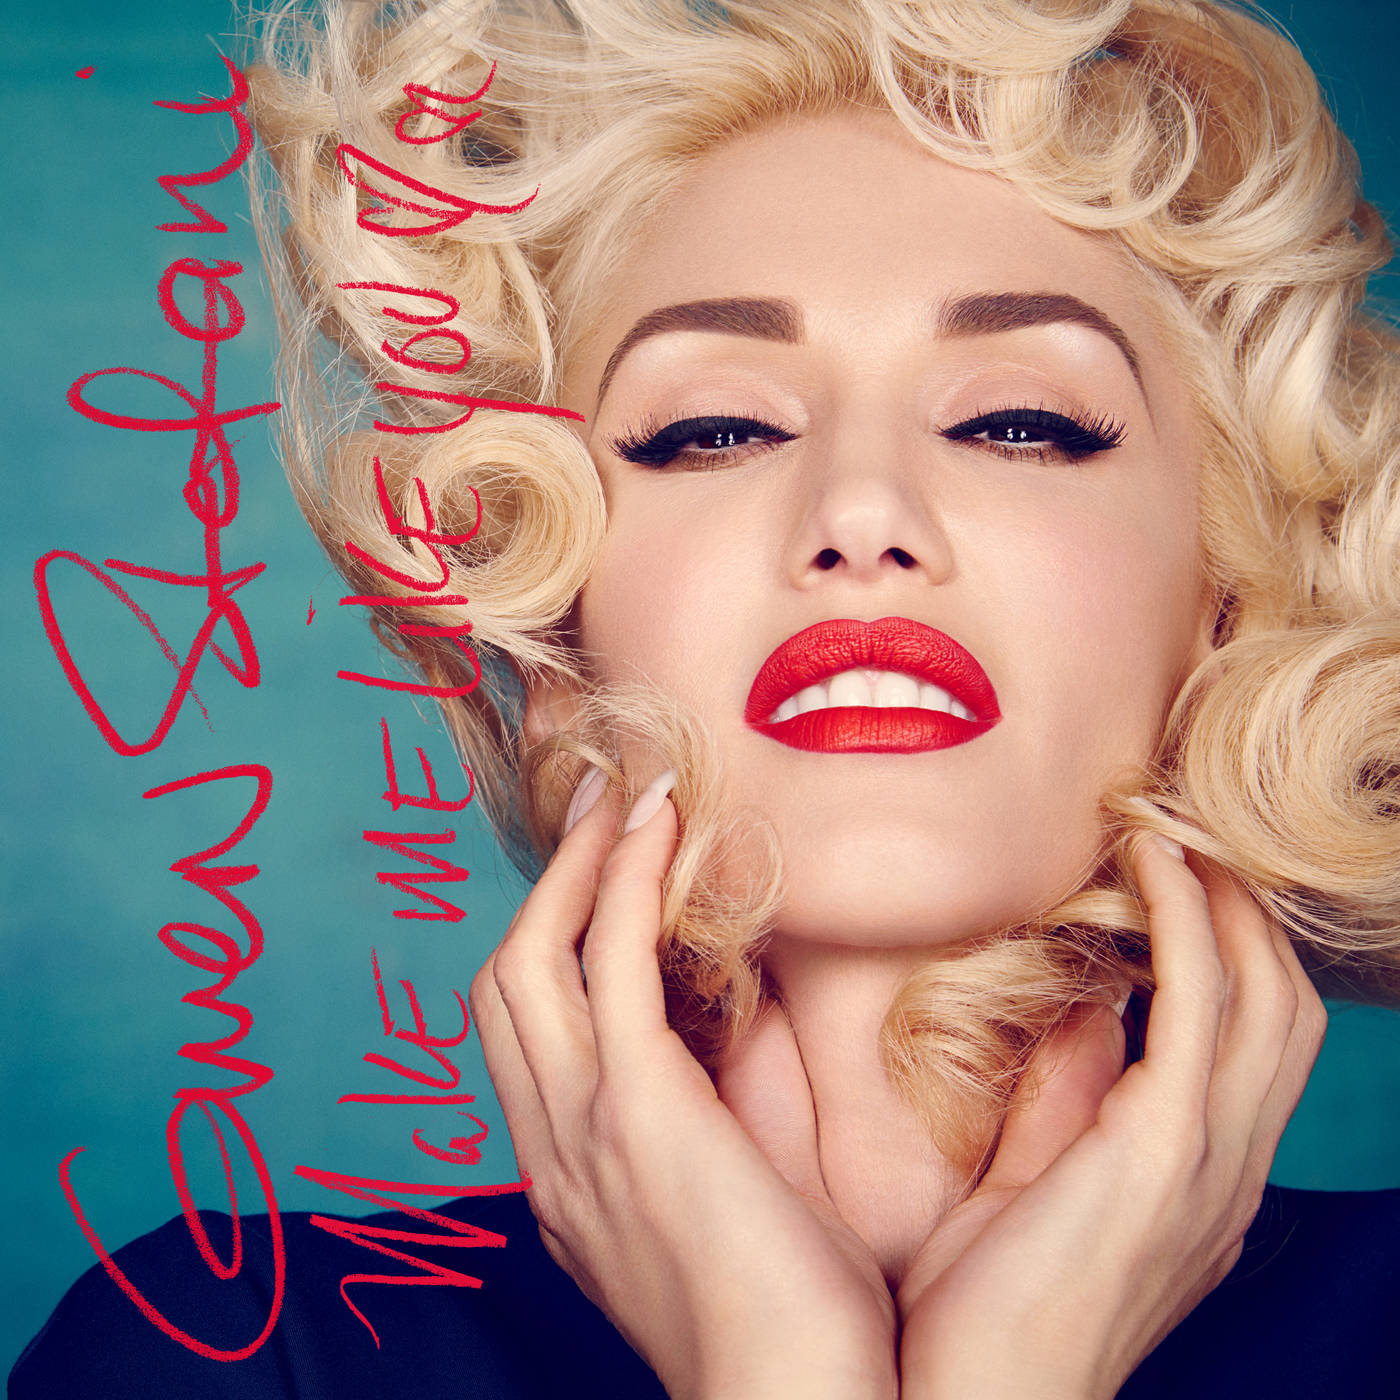 Gwen Stefani Shares New Single 'True Babe'